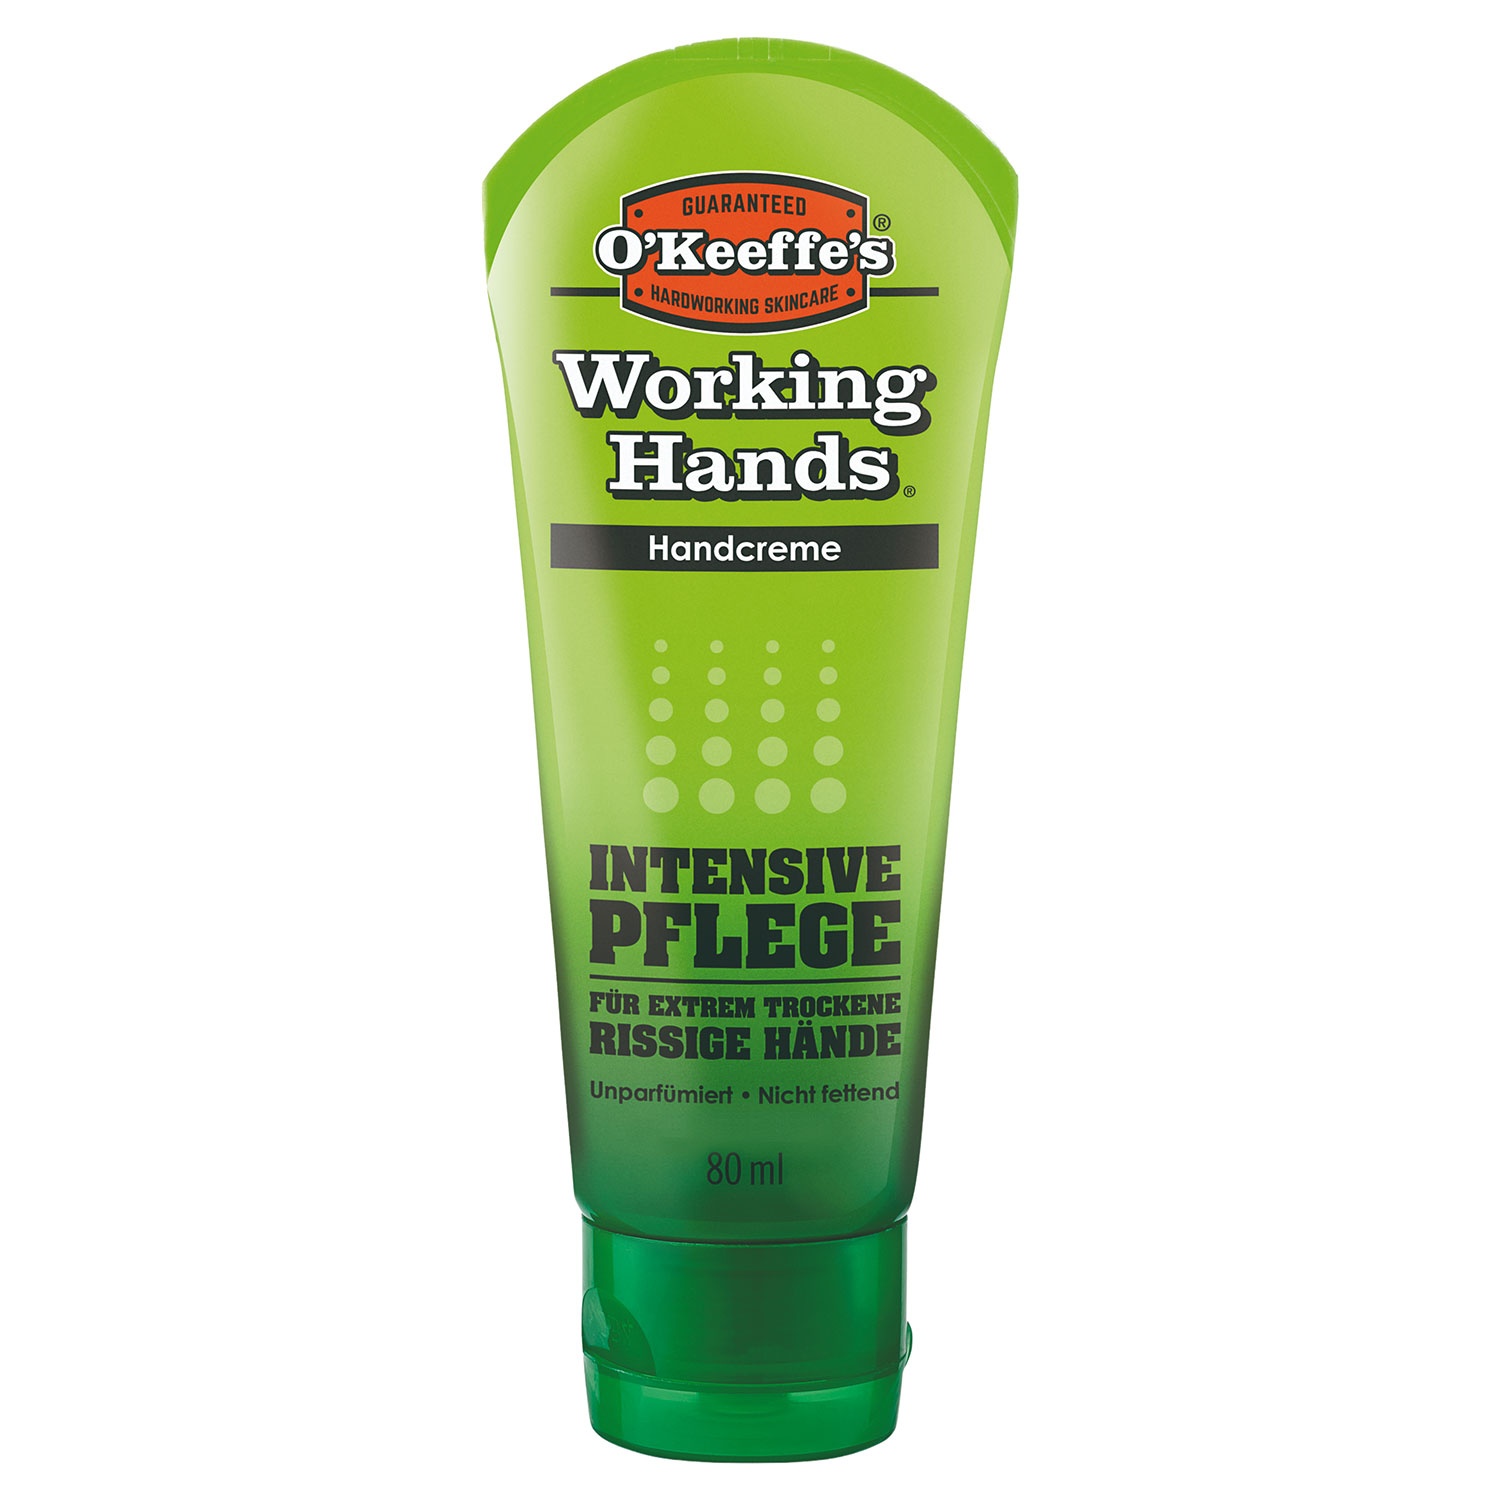 O’KEEFFE’S® Working Hands Handcreme 80 ml